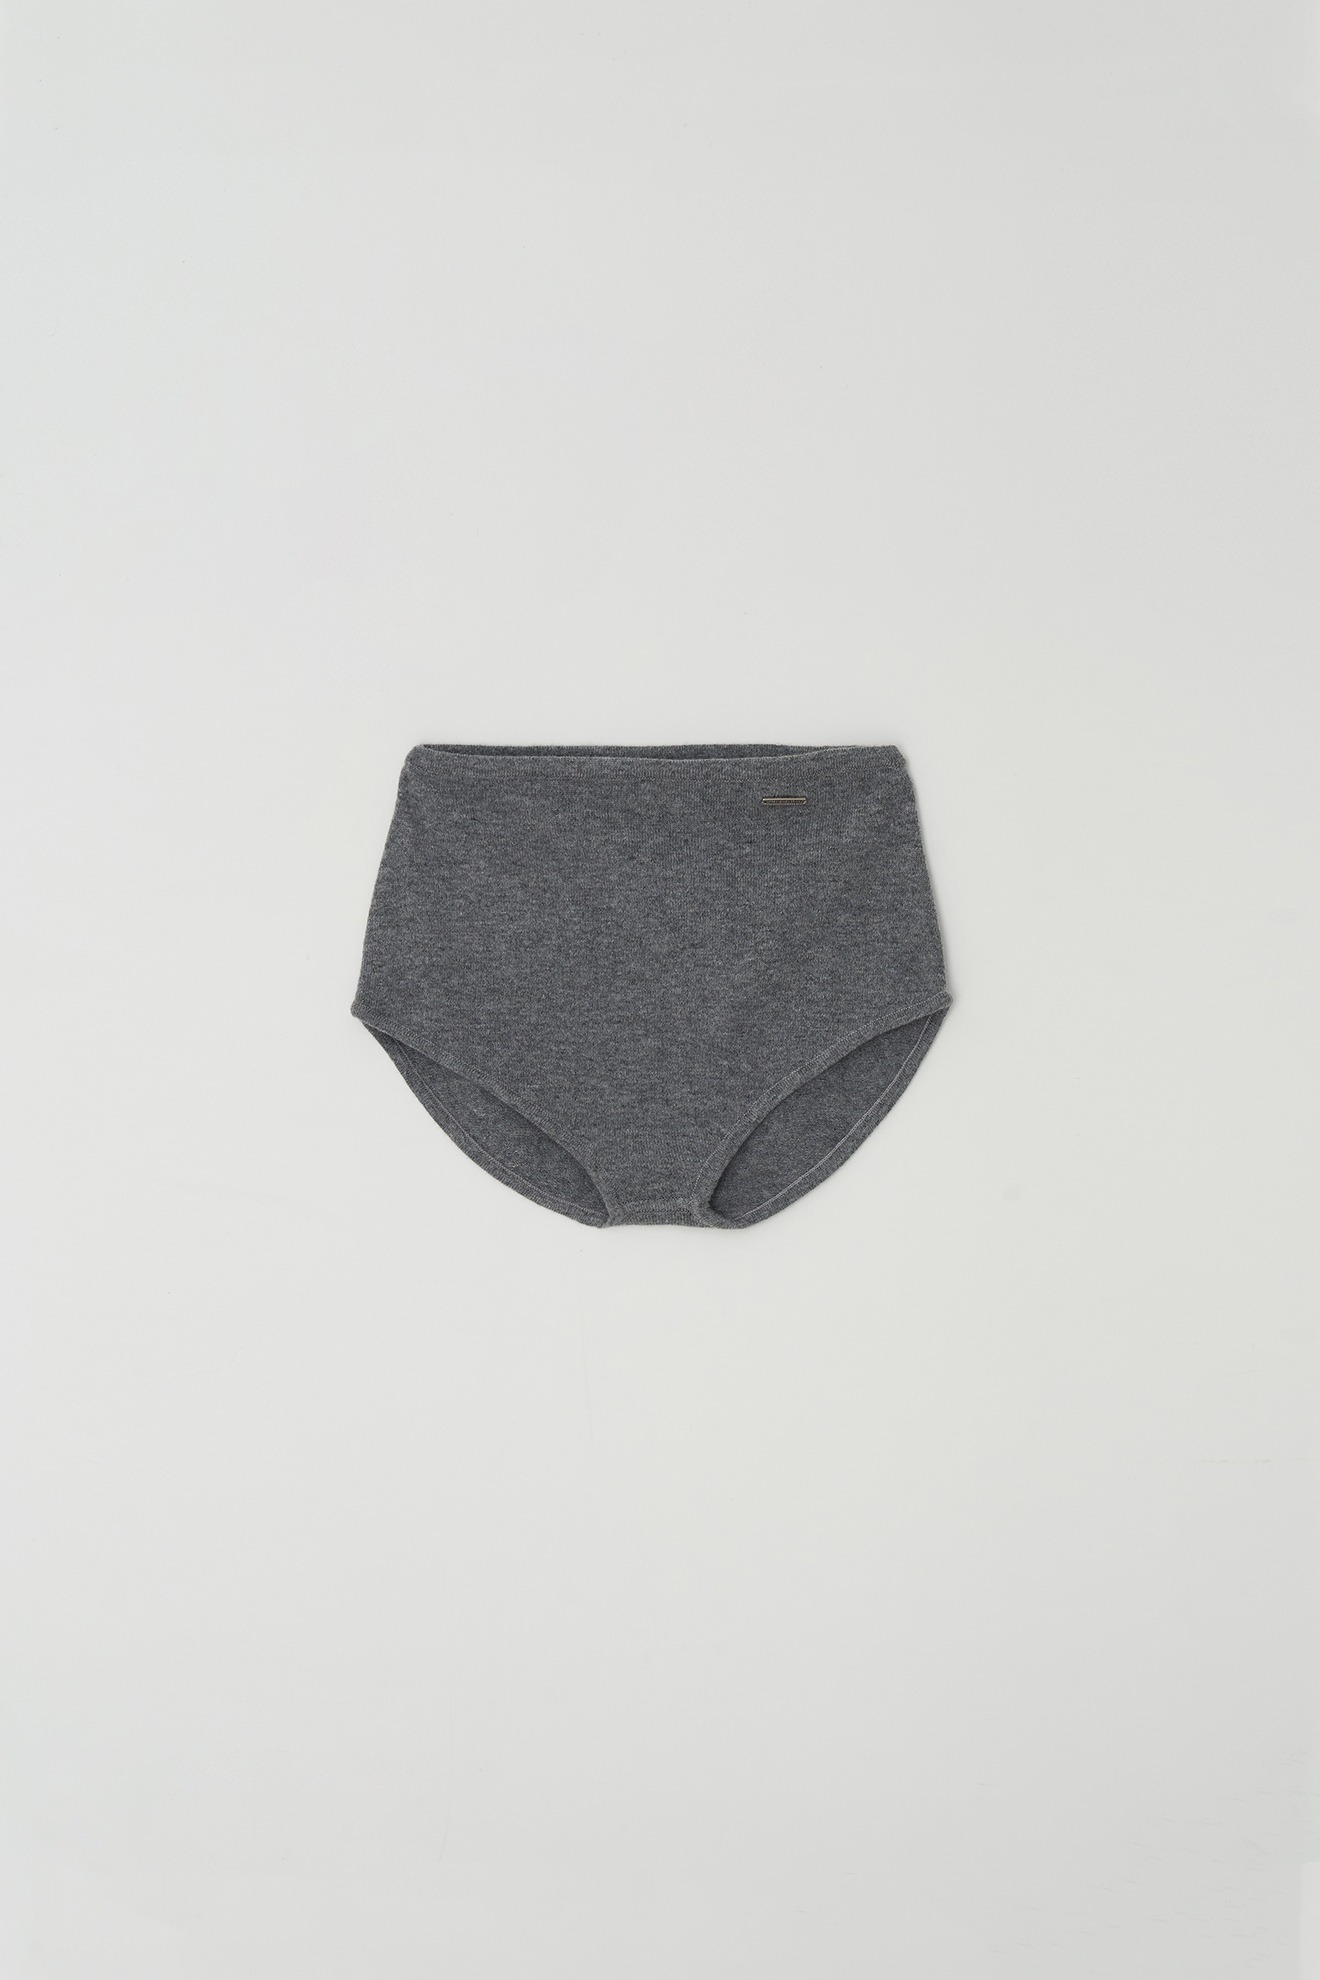 Micro Knit Pants (charcoal)